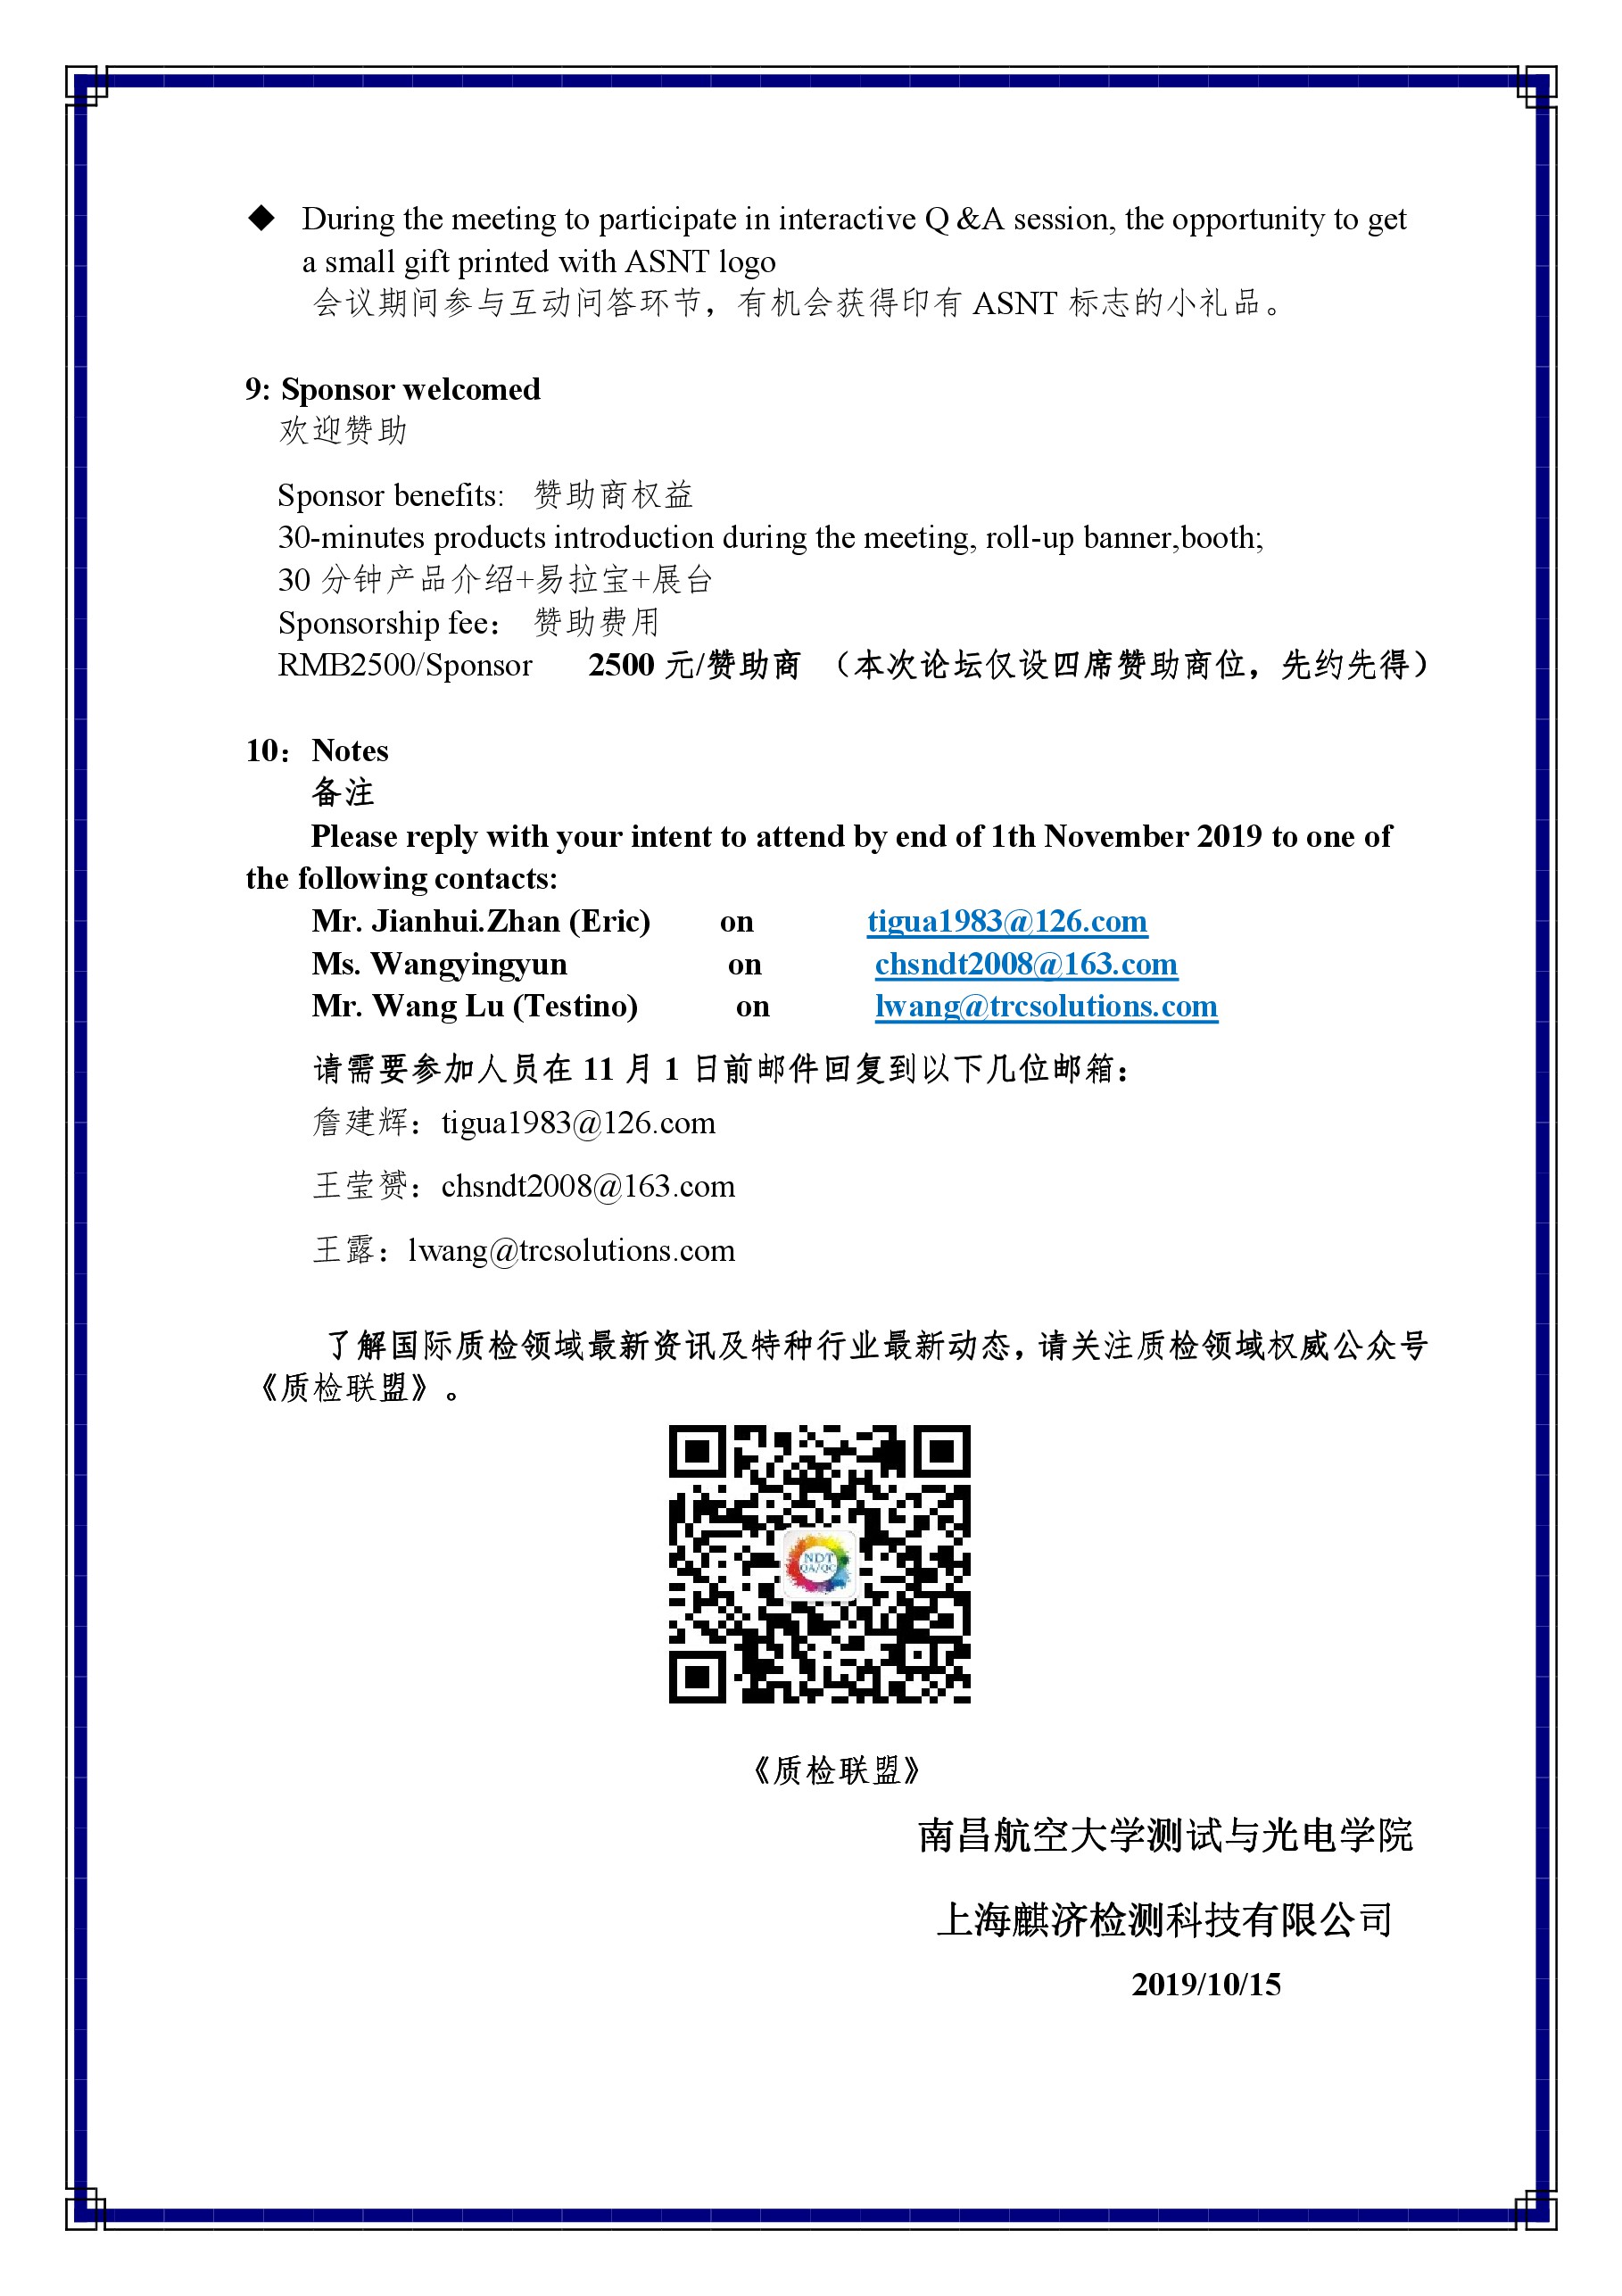 ASNT上海分部11月份会议-南昌航空大学高校发展篇-2-3-1-1-1.jpg